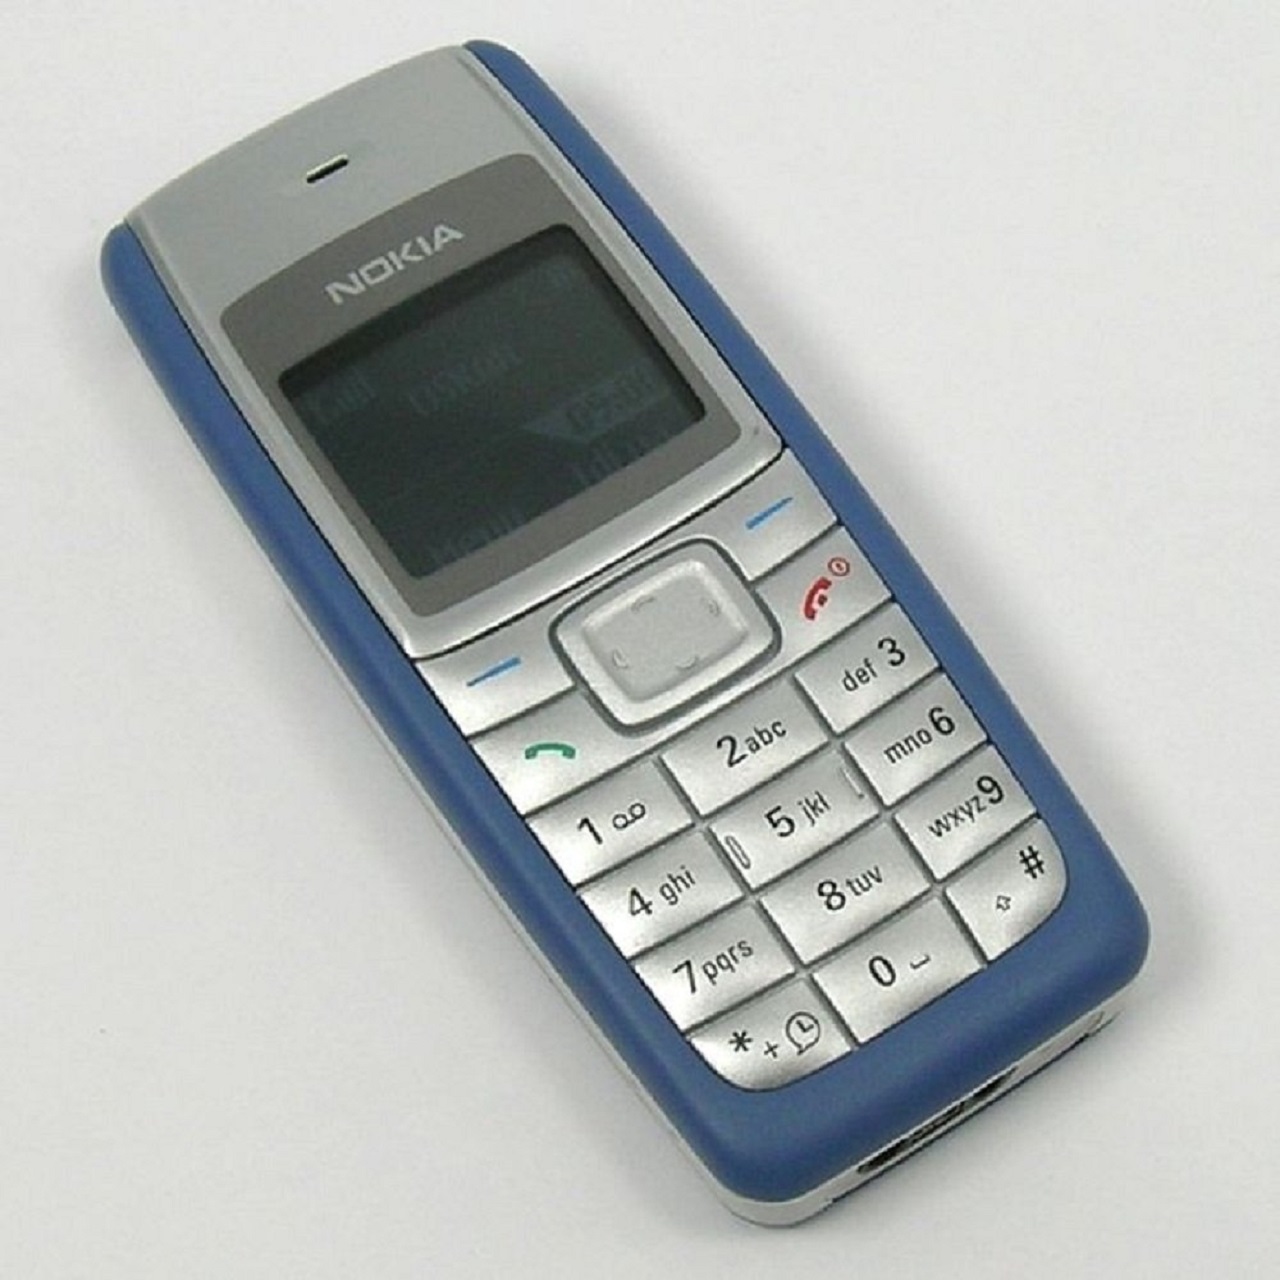 1 телефоны нокиа. Nokia 1110. Nokia 1110i. Нокиа 1210. Nokia 1110i Red.